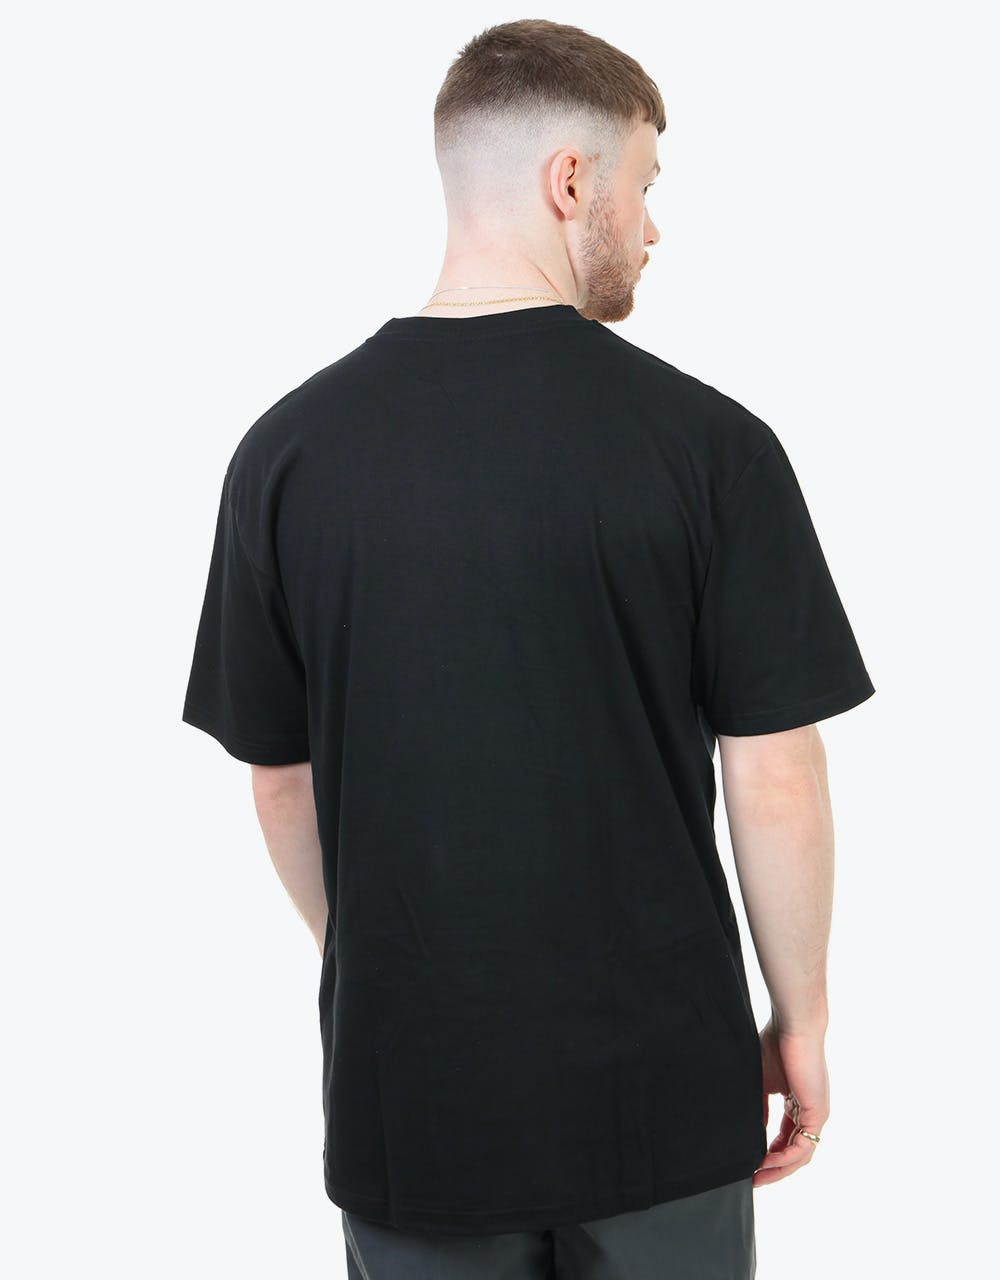 Independent O.G.B.C. T-Shirt - Black